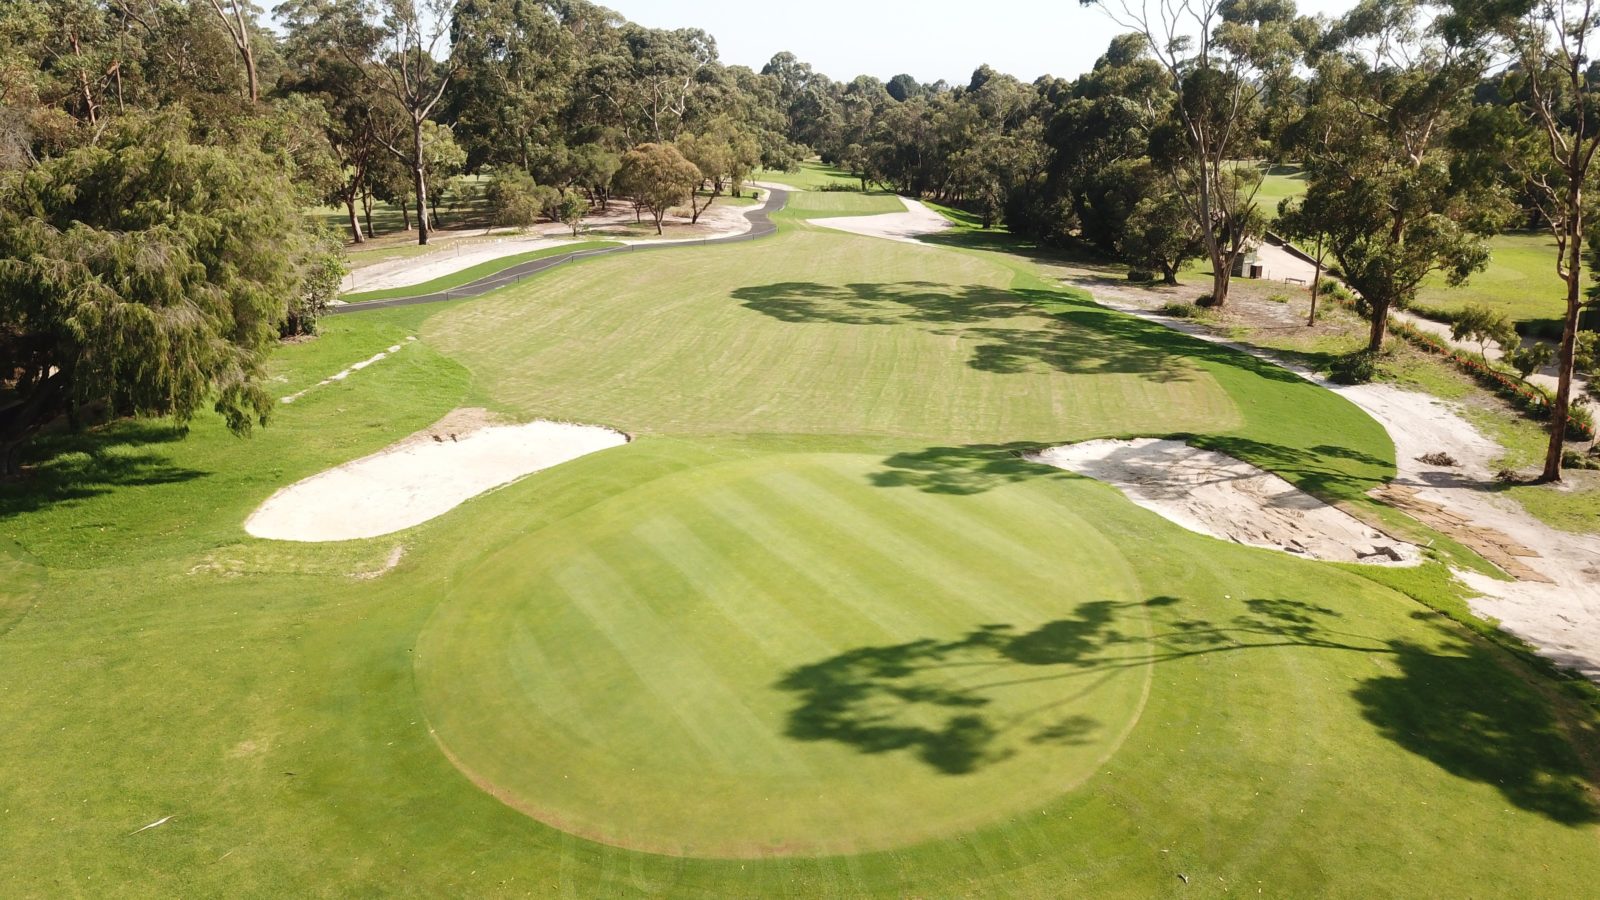 Centenary Park Golf Course Aerial of the 18th